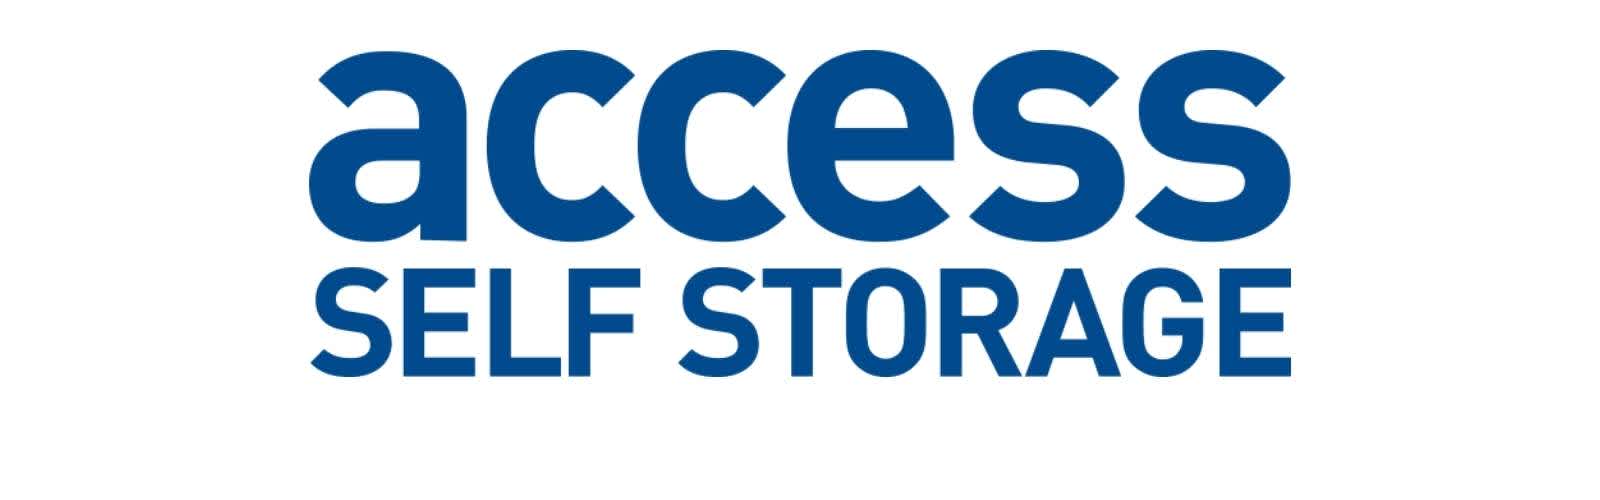 Access self storage logo